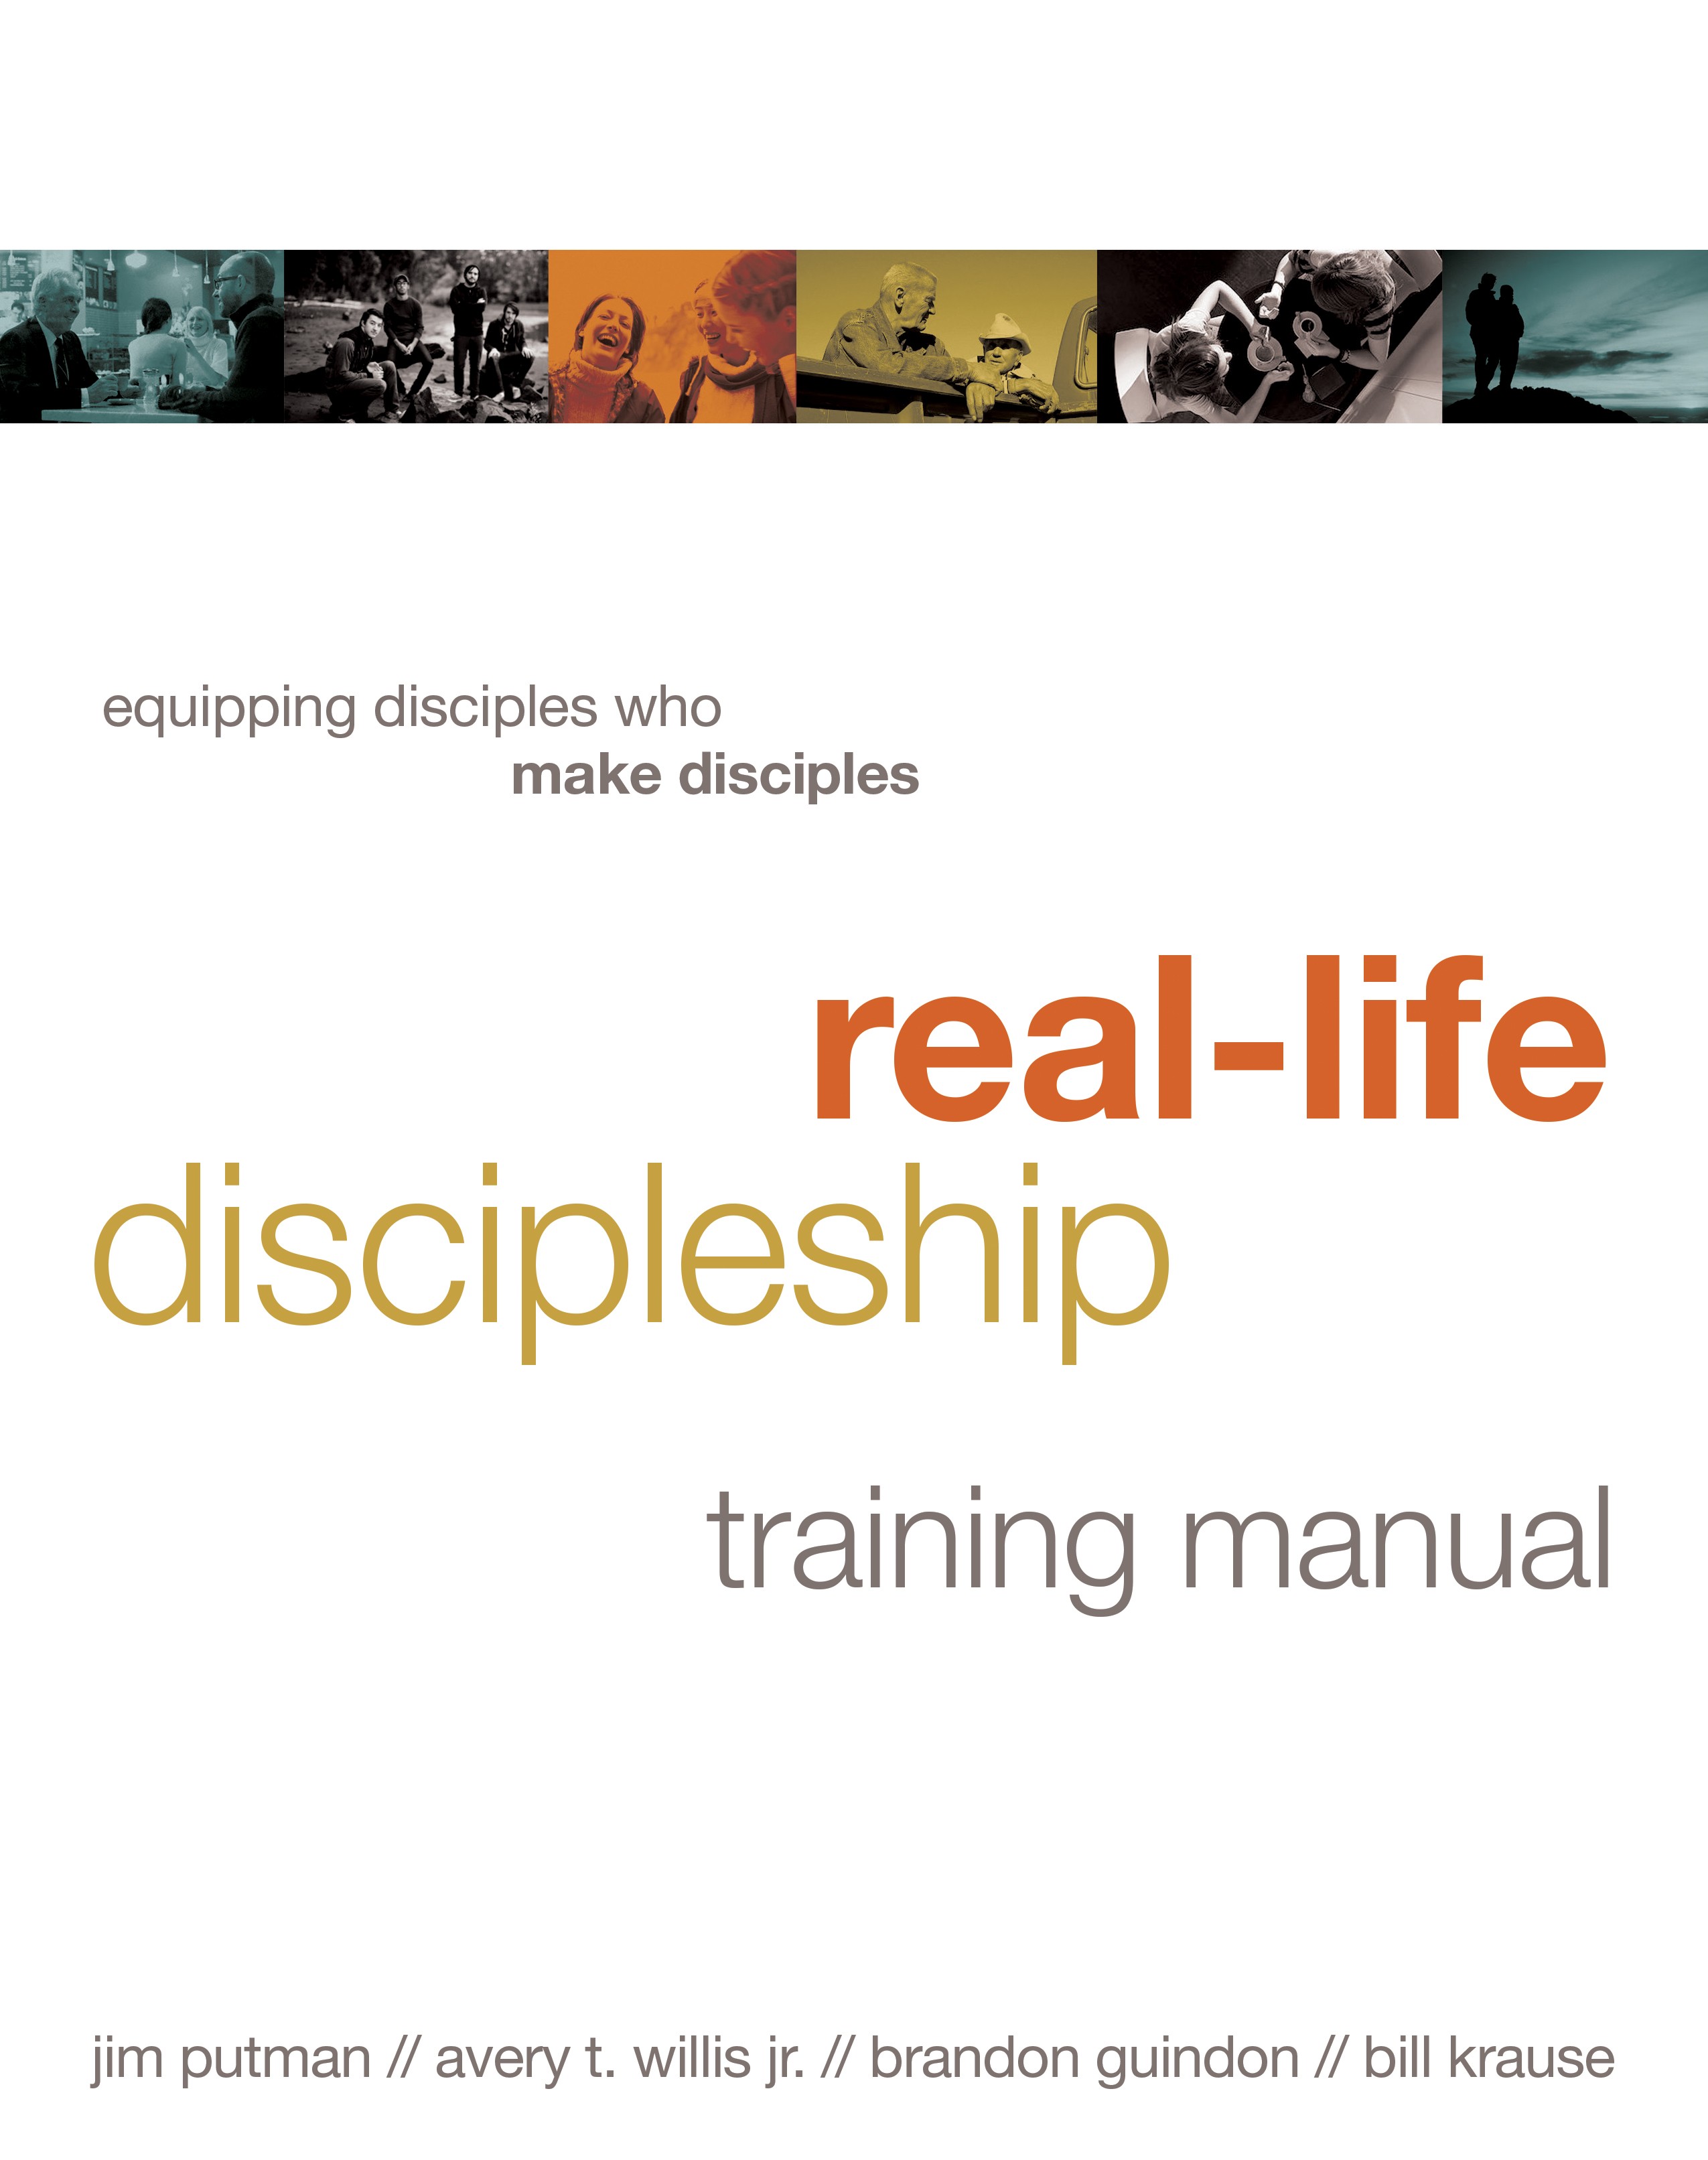  Real-Life Discipleship Training Manual